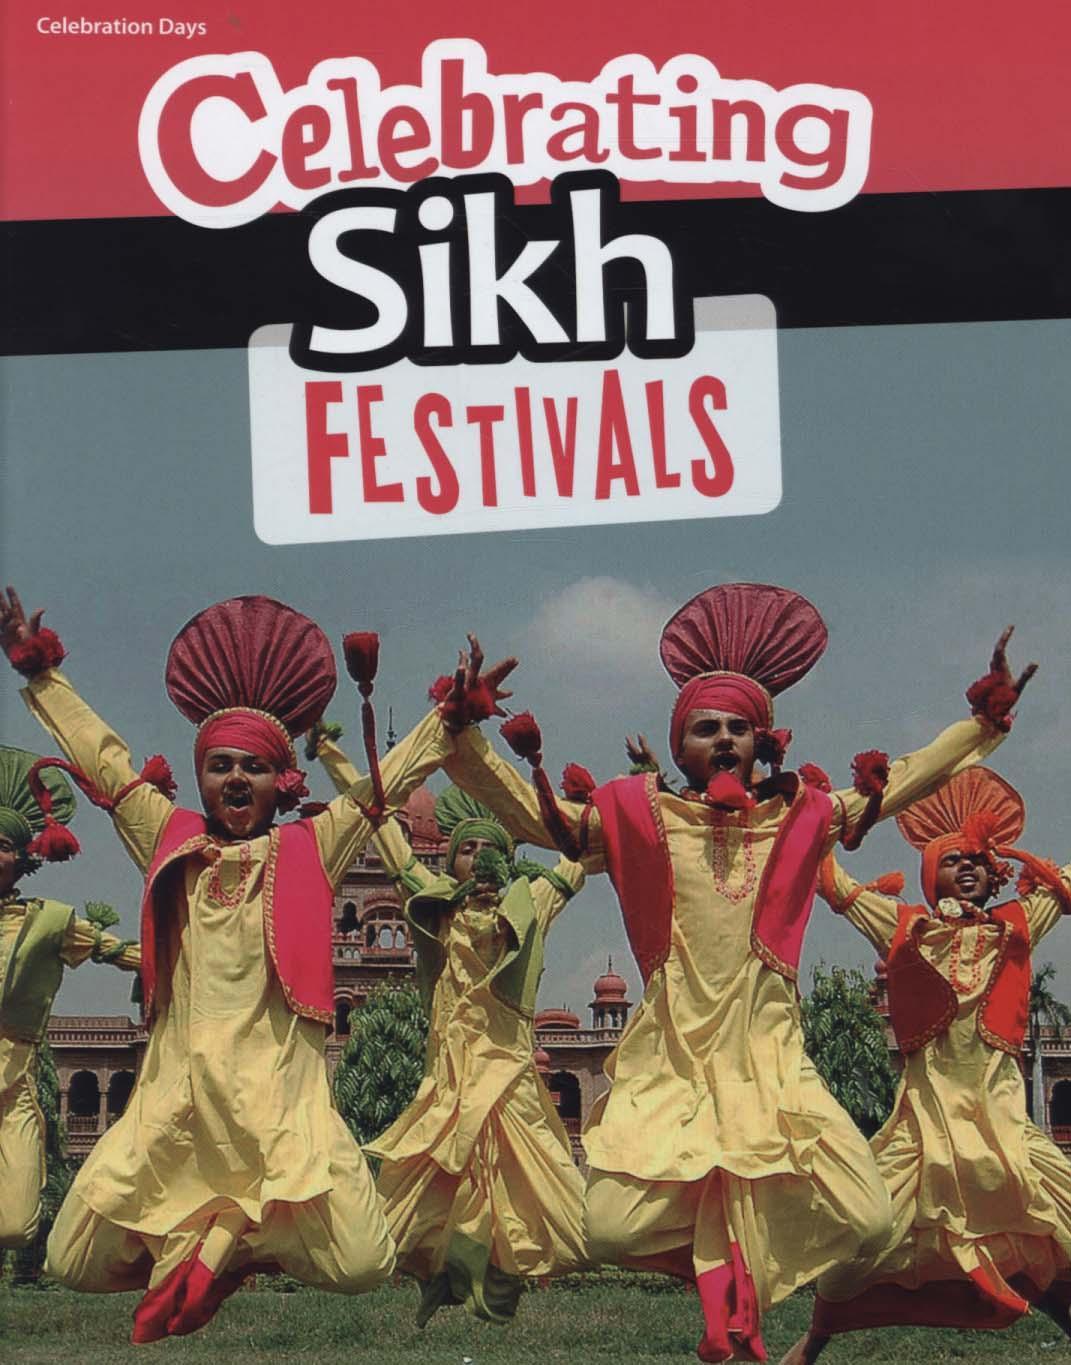 Celebrating Sikh Festivals